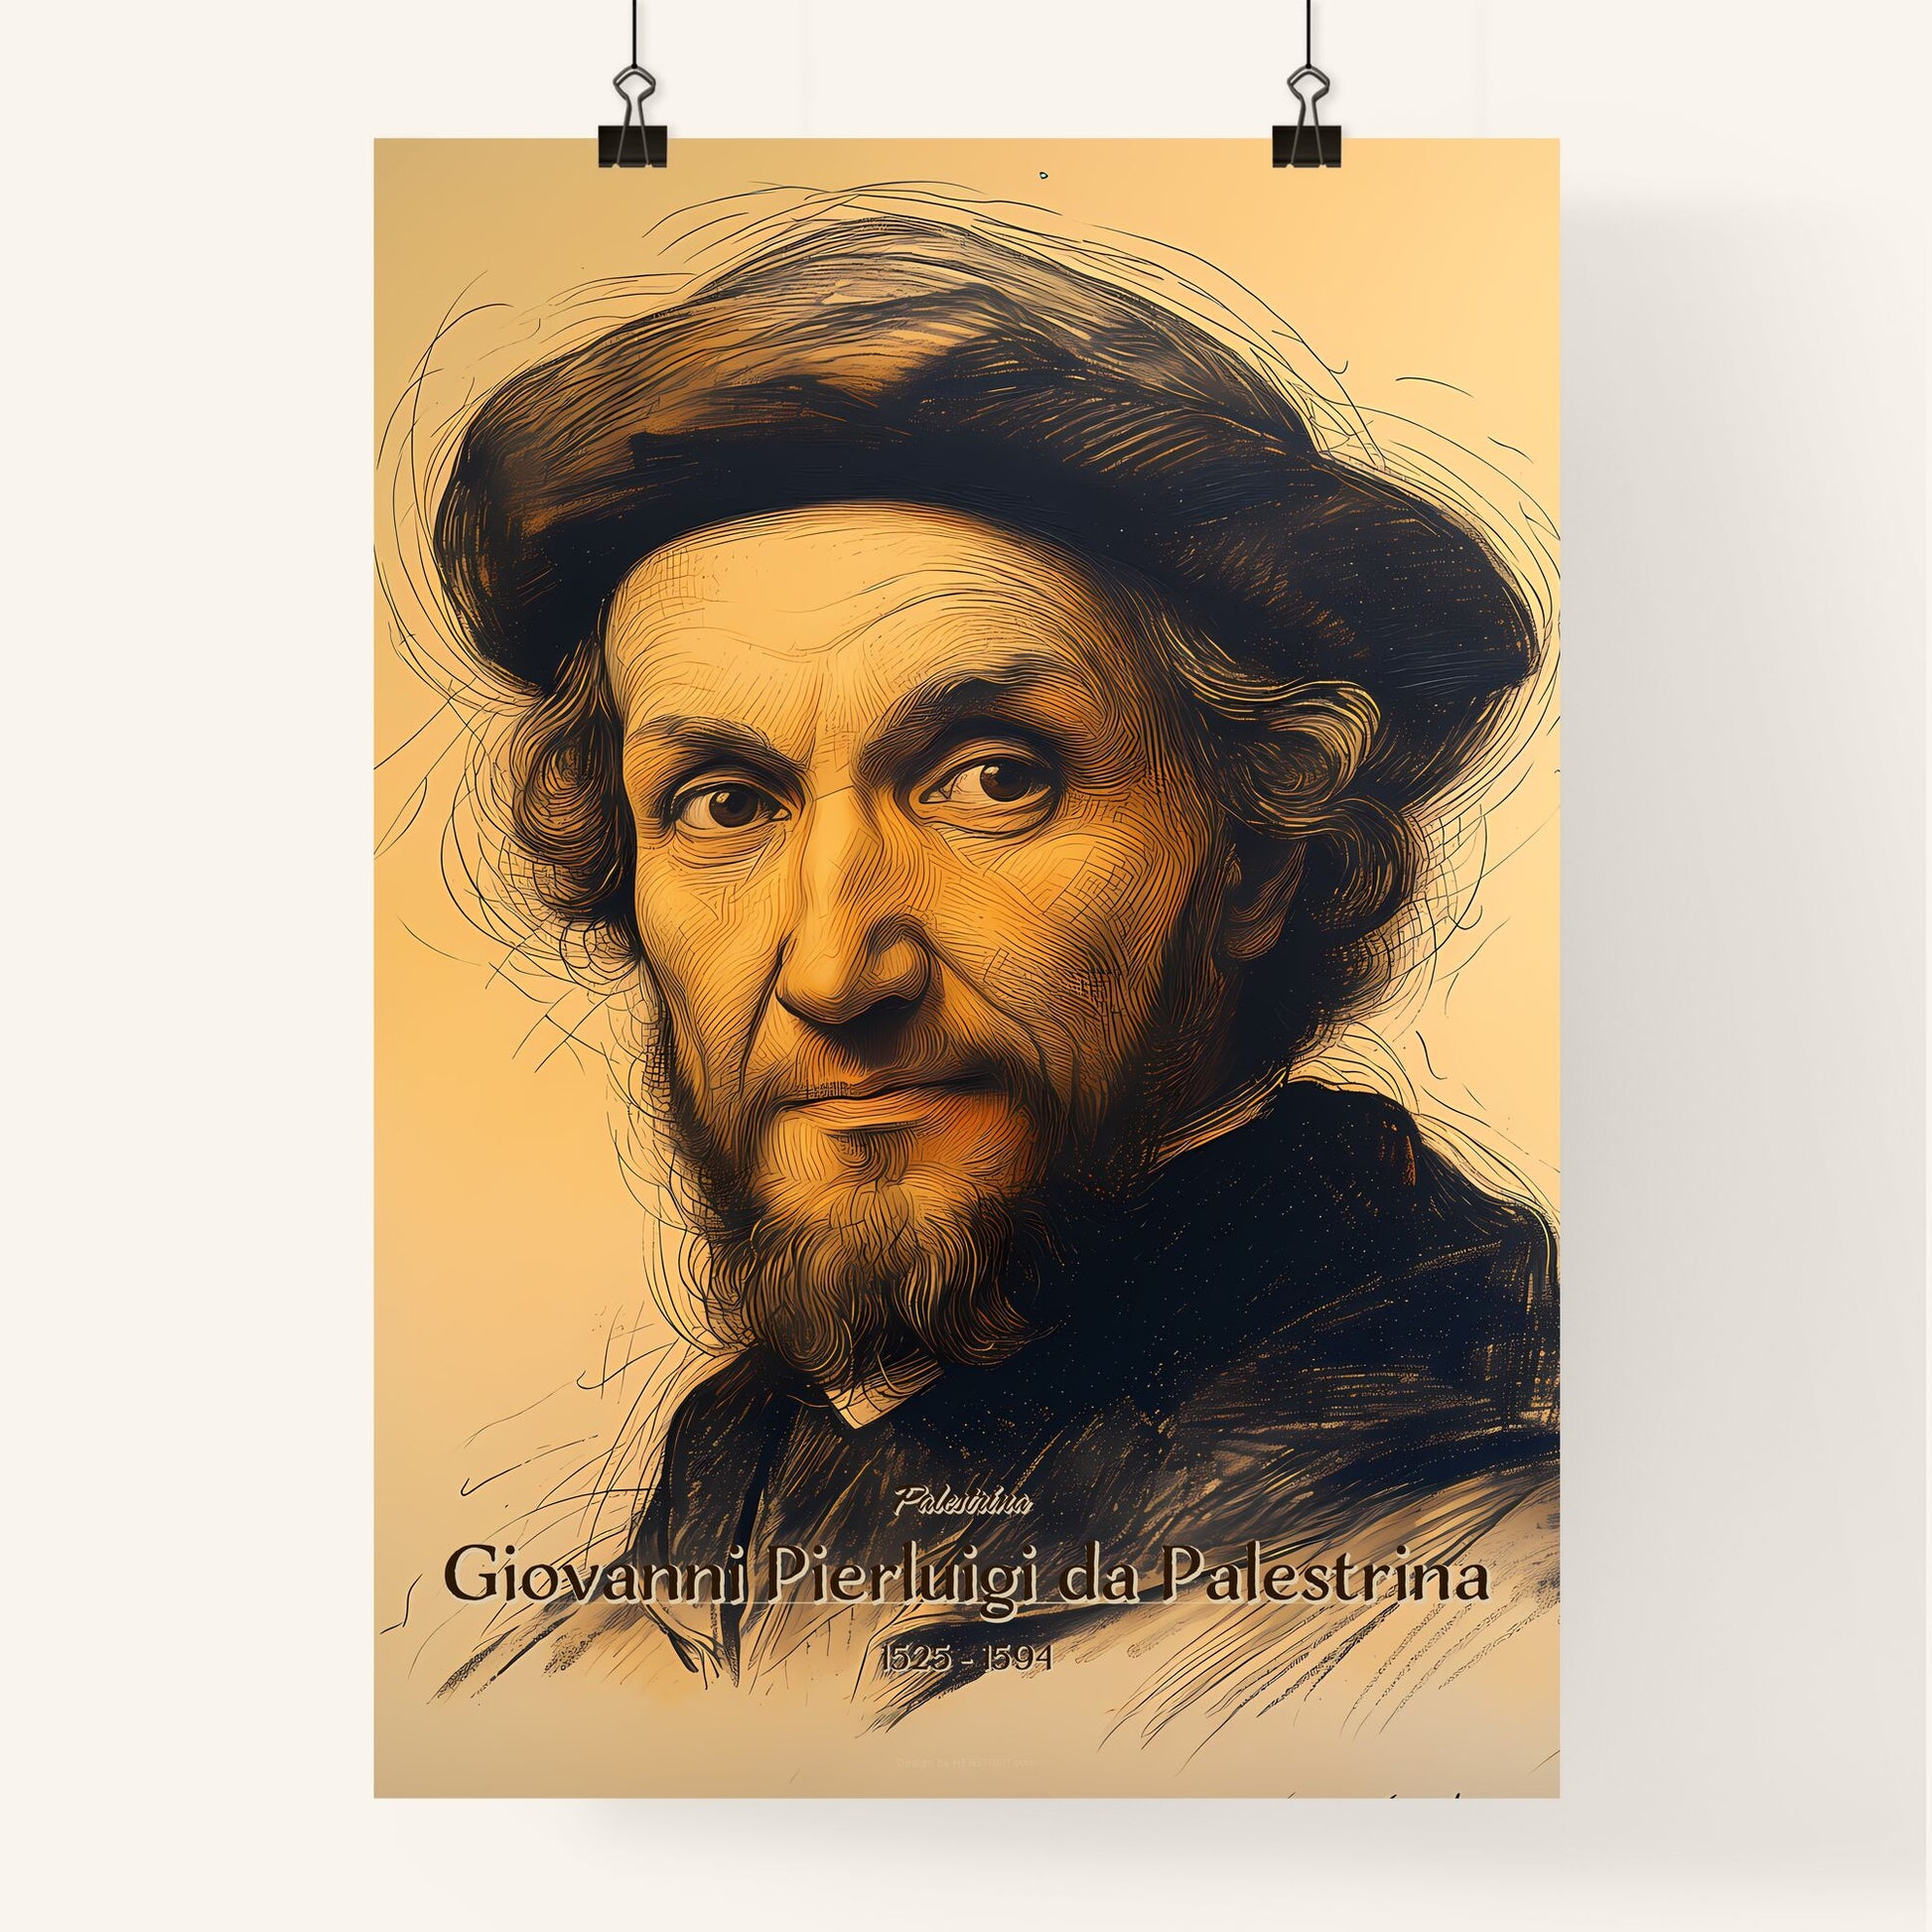 Palestrina, Giovanni Pierluigi da Palestrina, 1525 - 1594, A Poster of a man with a beard wearing a hat Default Title